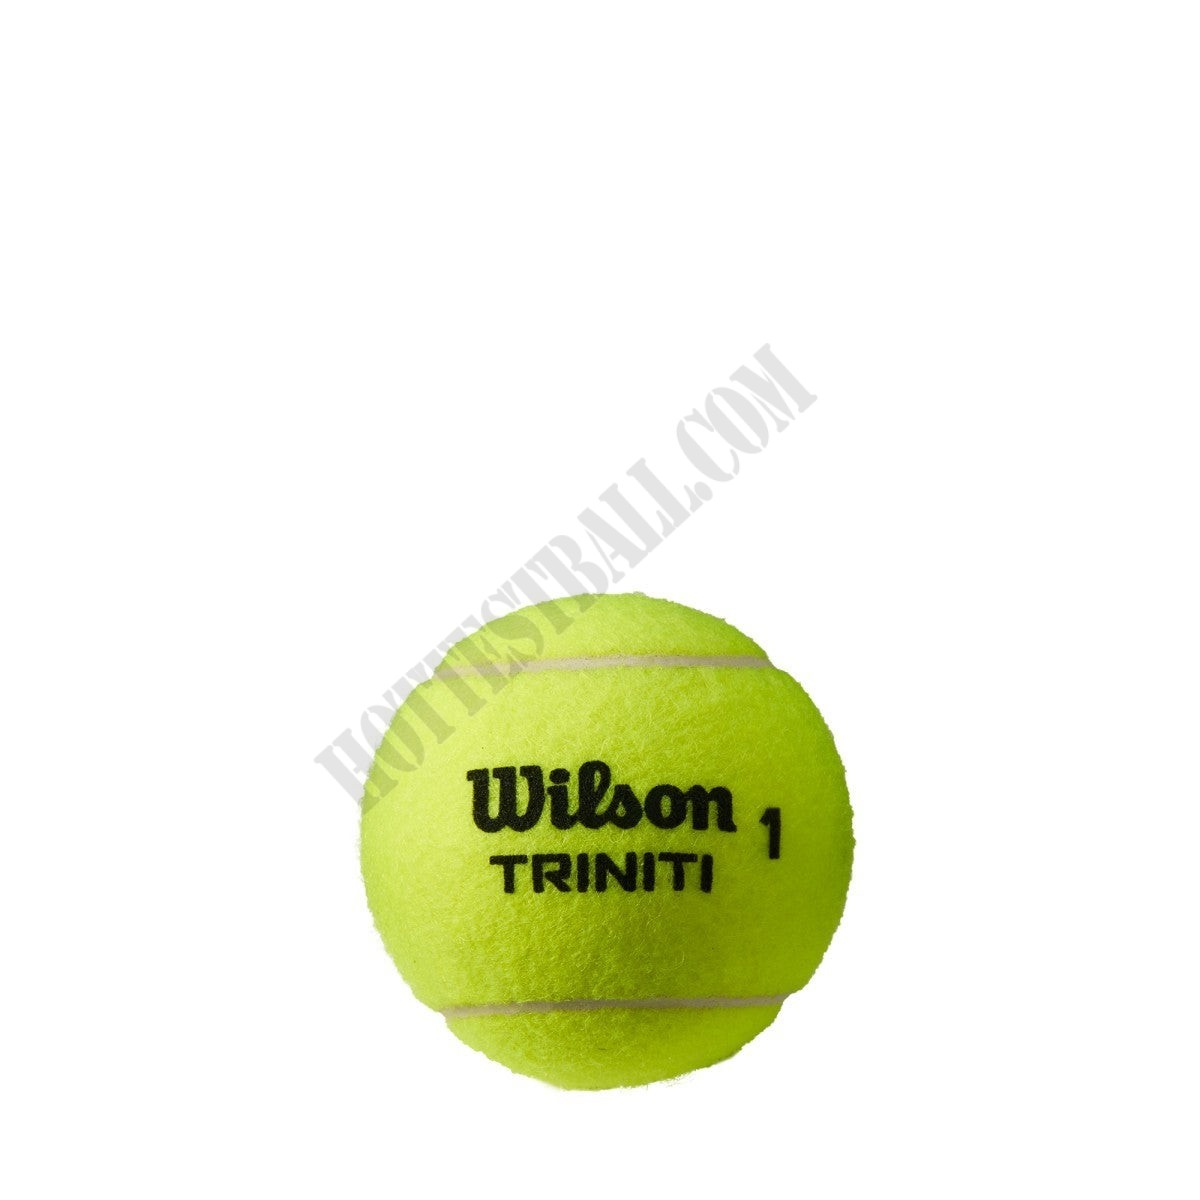 Triniti Tennis Balls - 3 BSleeve - Wilson Discount Store - -1